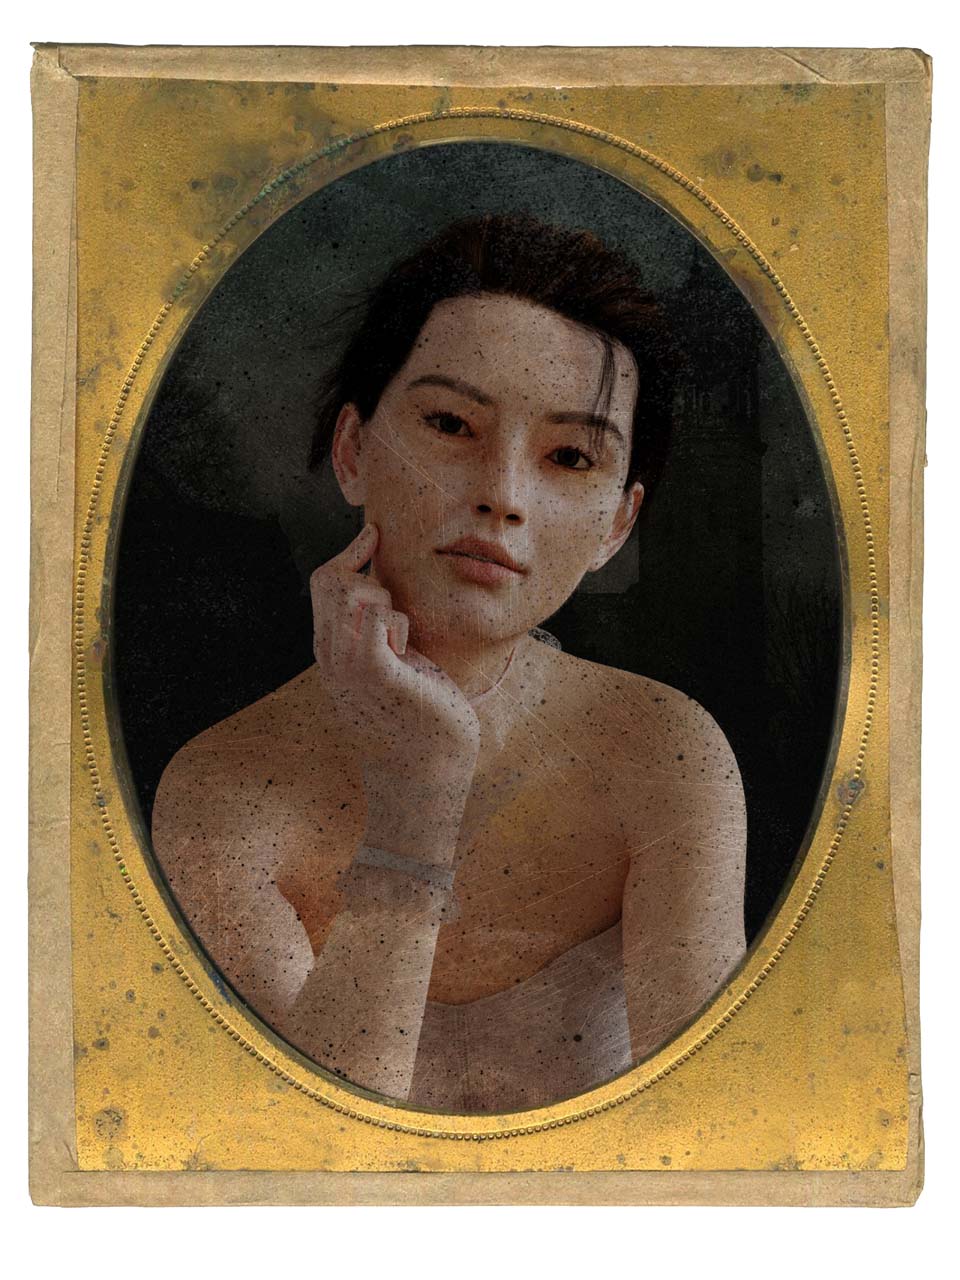 Felina Schroedinger Studioportrait, undated, courtesy Collection Claire Castelle.